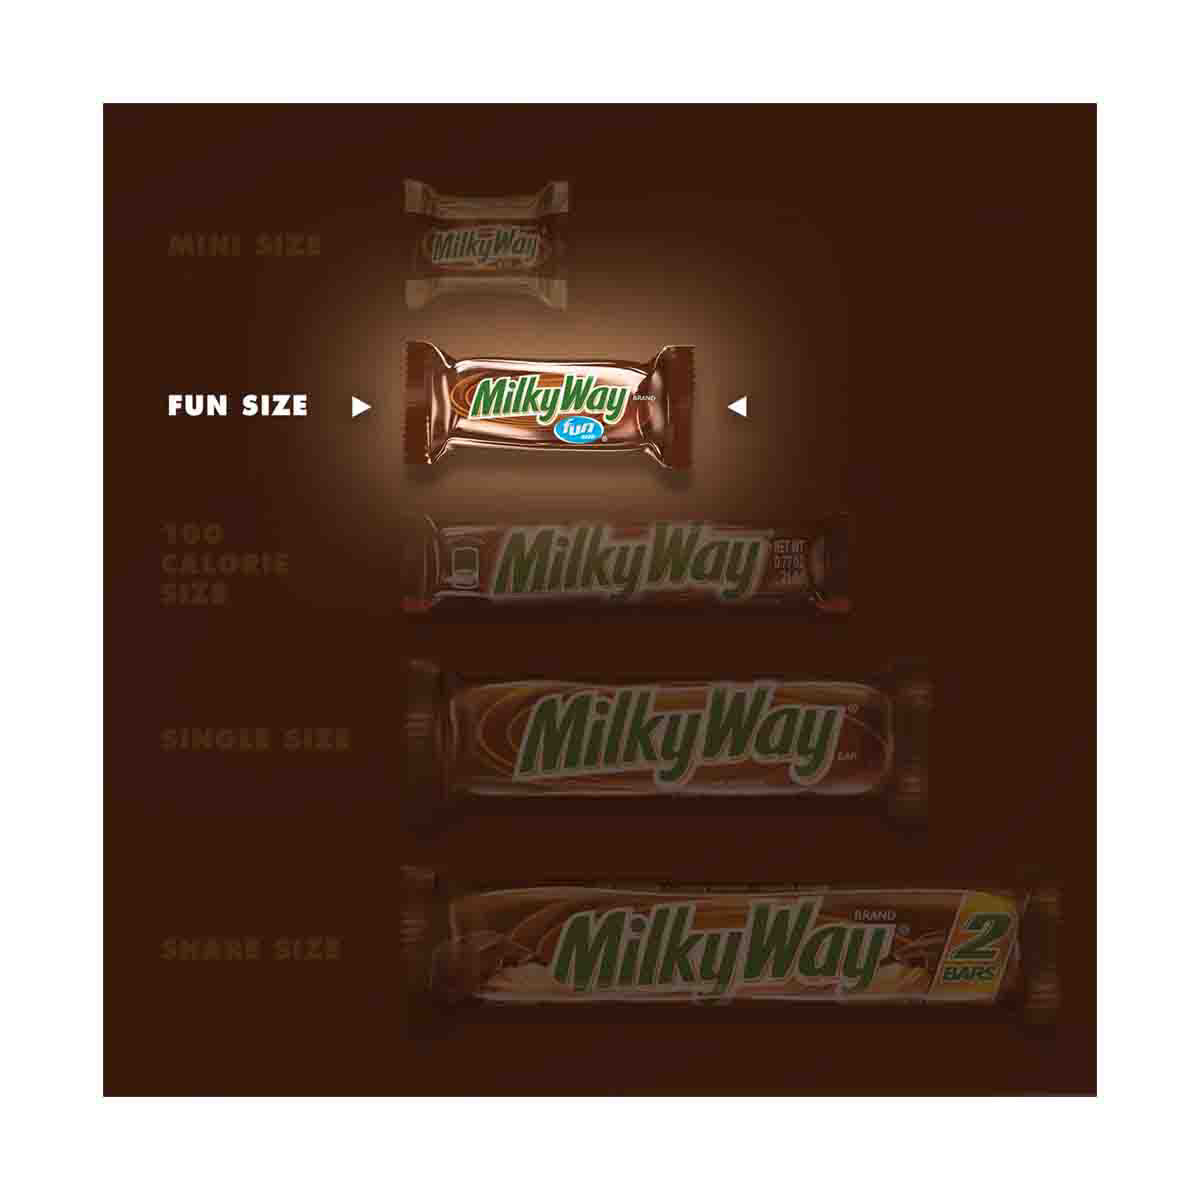 Milky Way Candy Bars - 10.65 oz bag